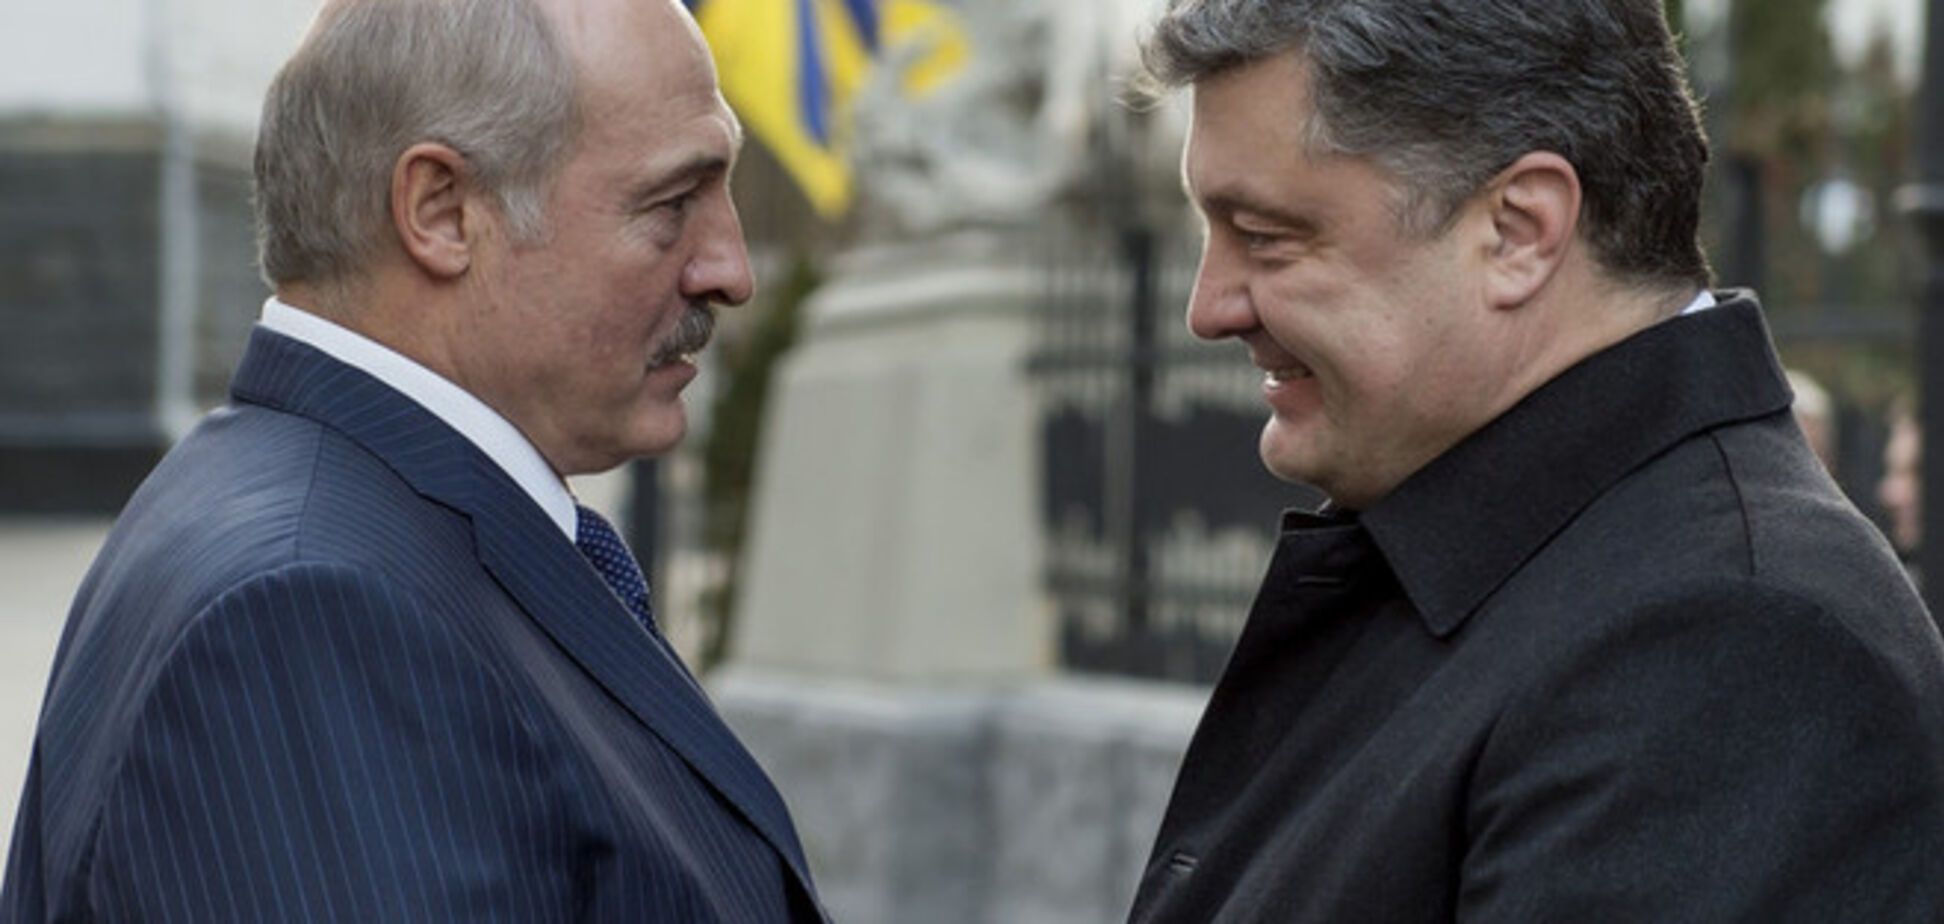 Кручу верчу - запутать хочу, или Немного о 'развороте Лукашенко'